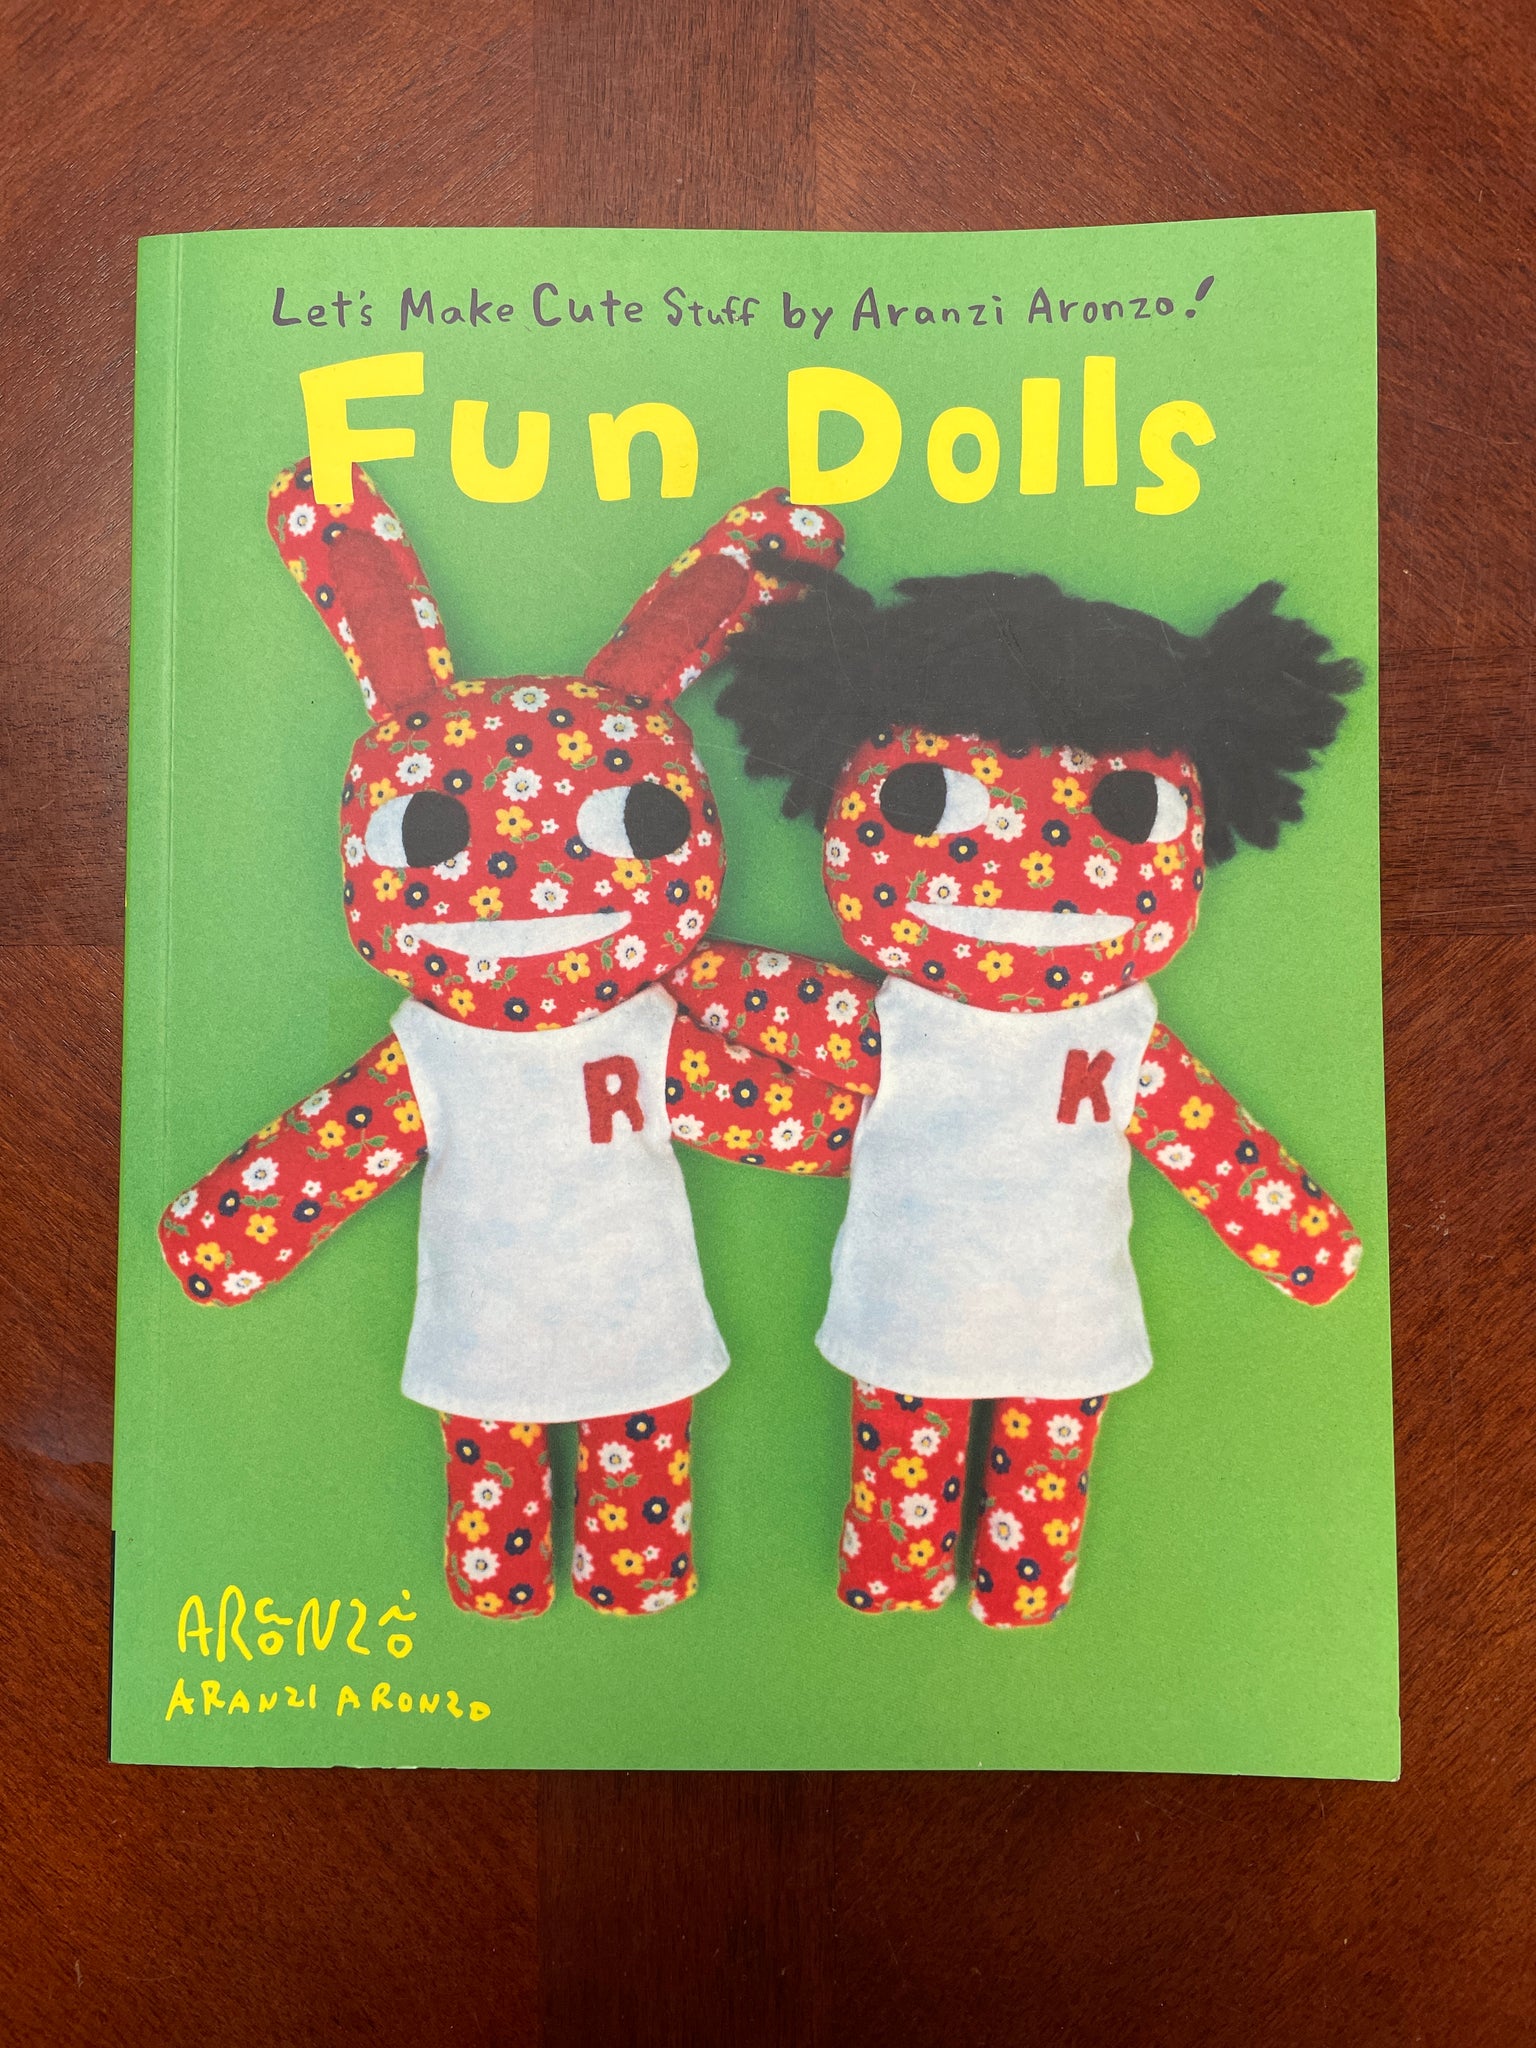 2007 Doll Making Book - "Fun Dolls"